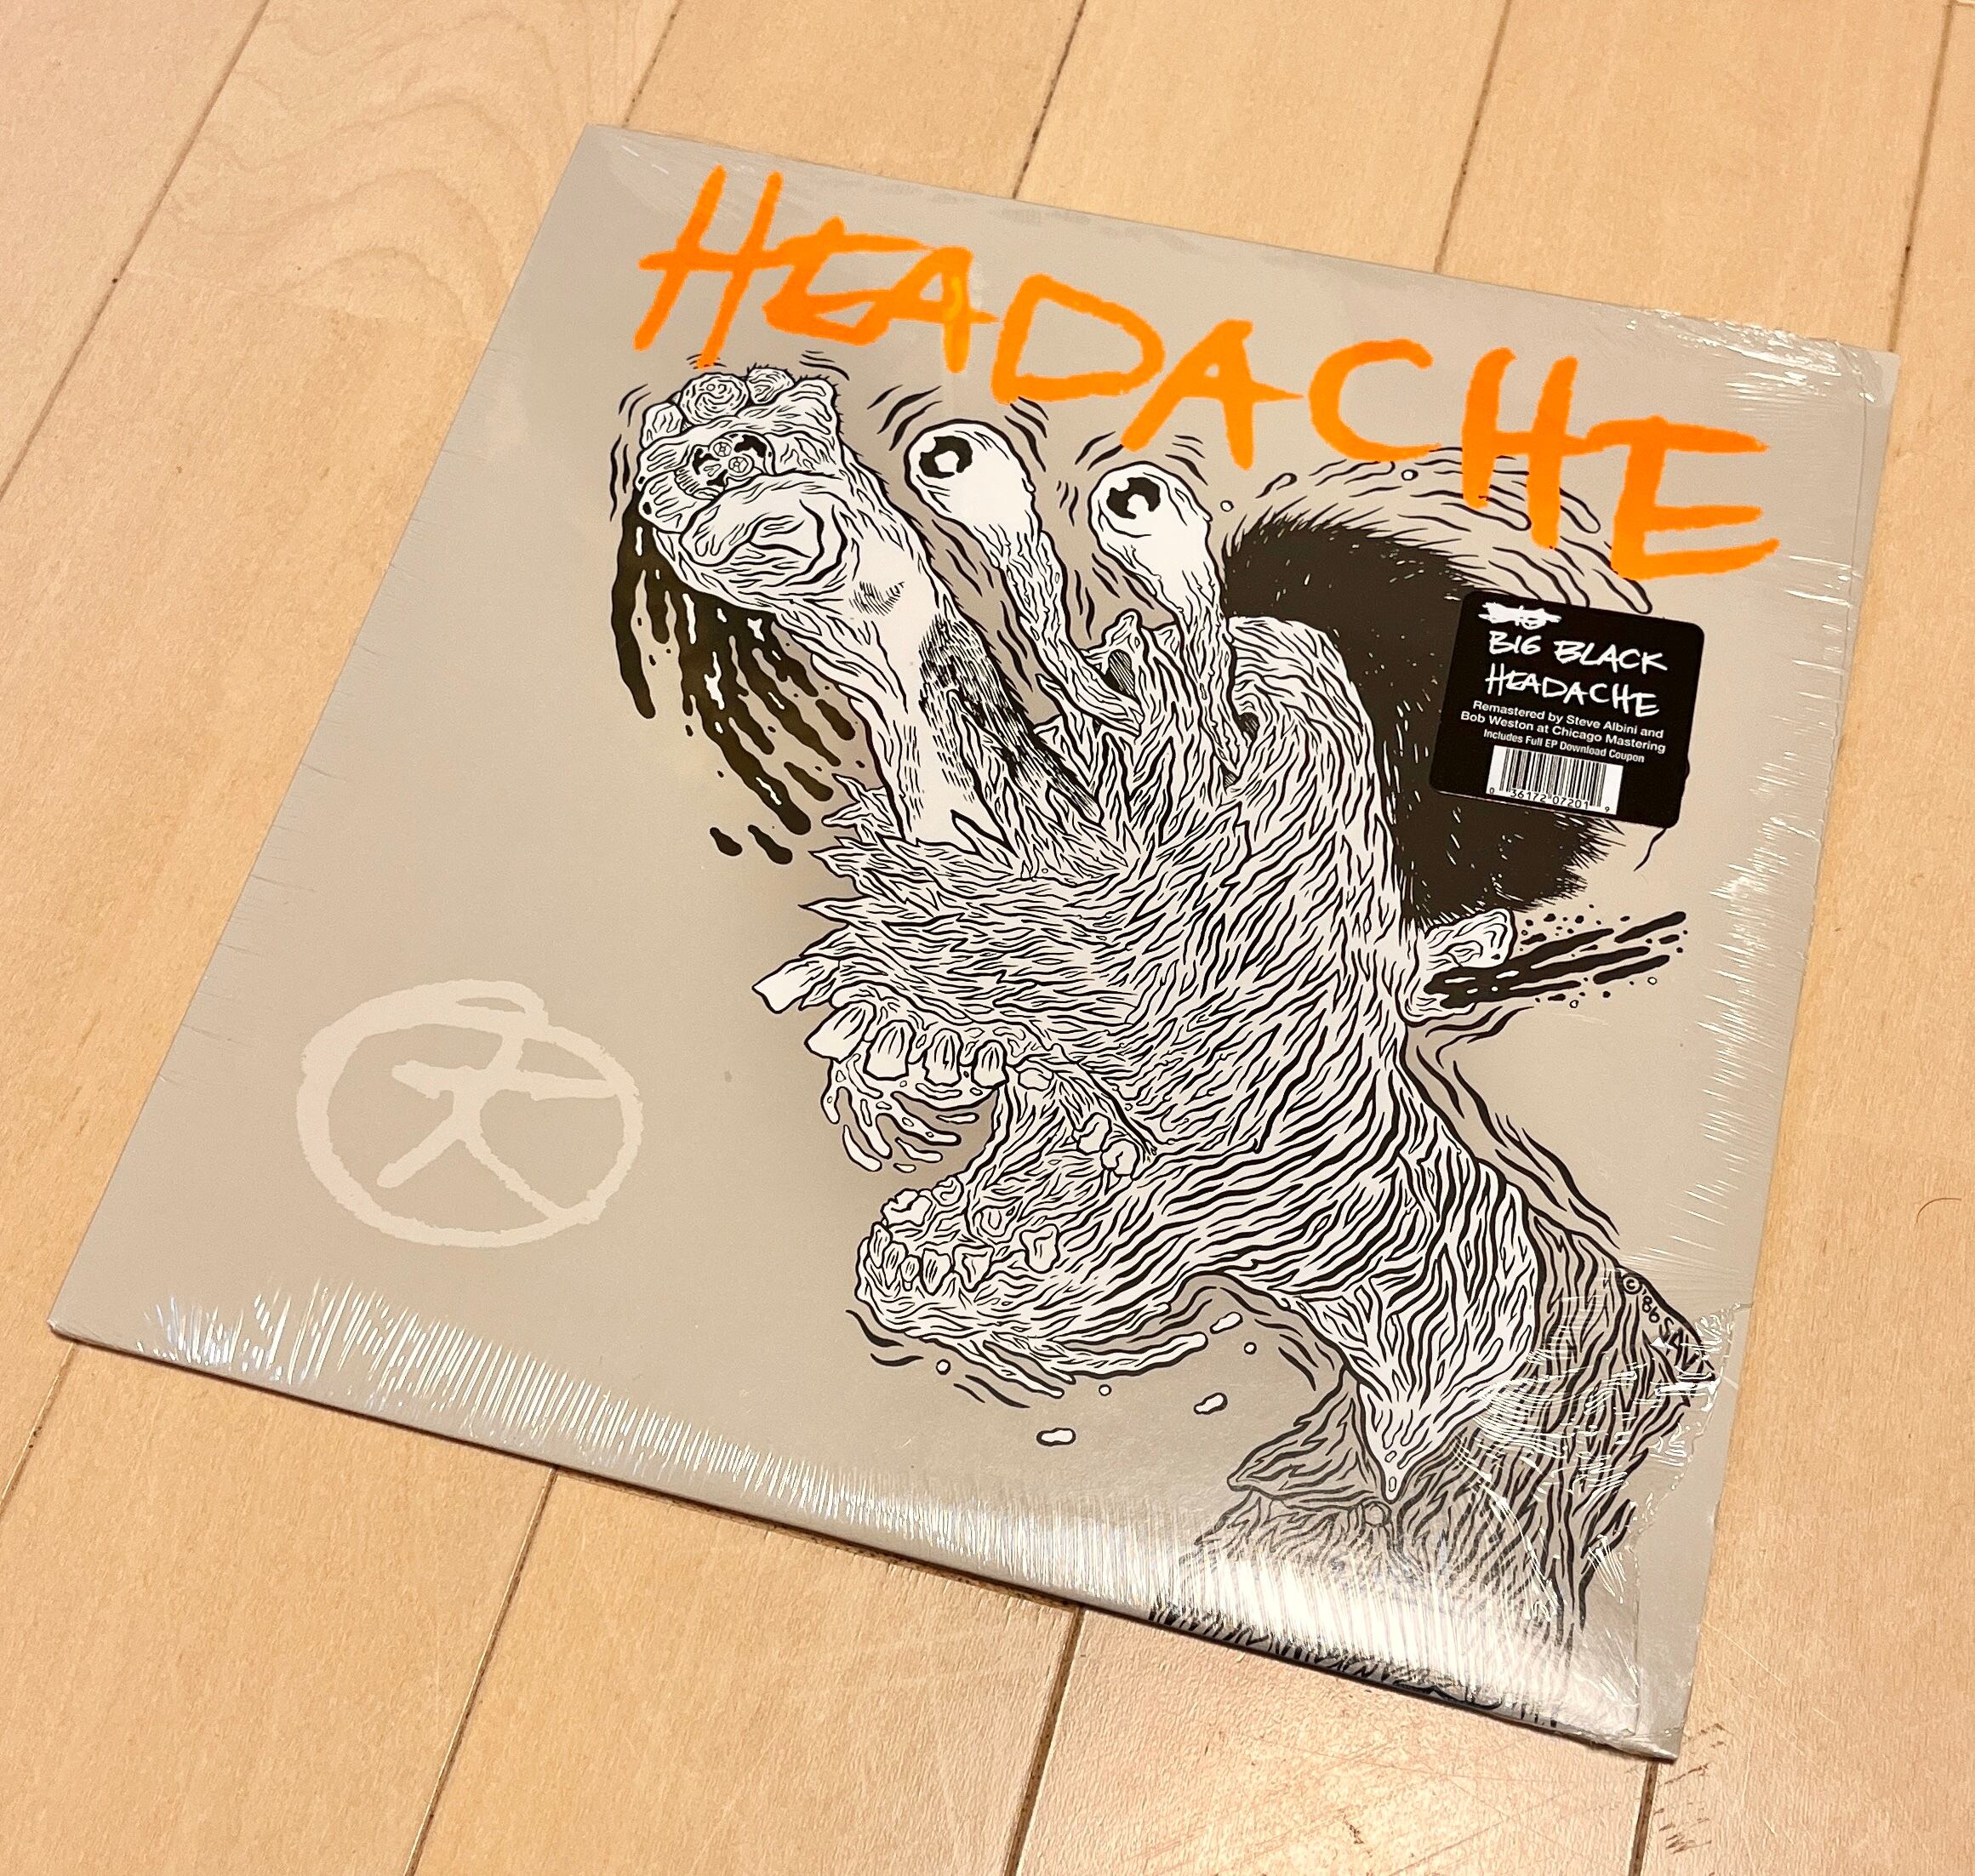 Big Black “Headache” 12” EP Vinyl + DL Code | buzzcat records